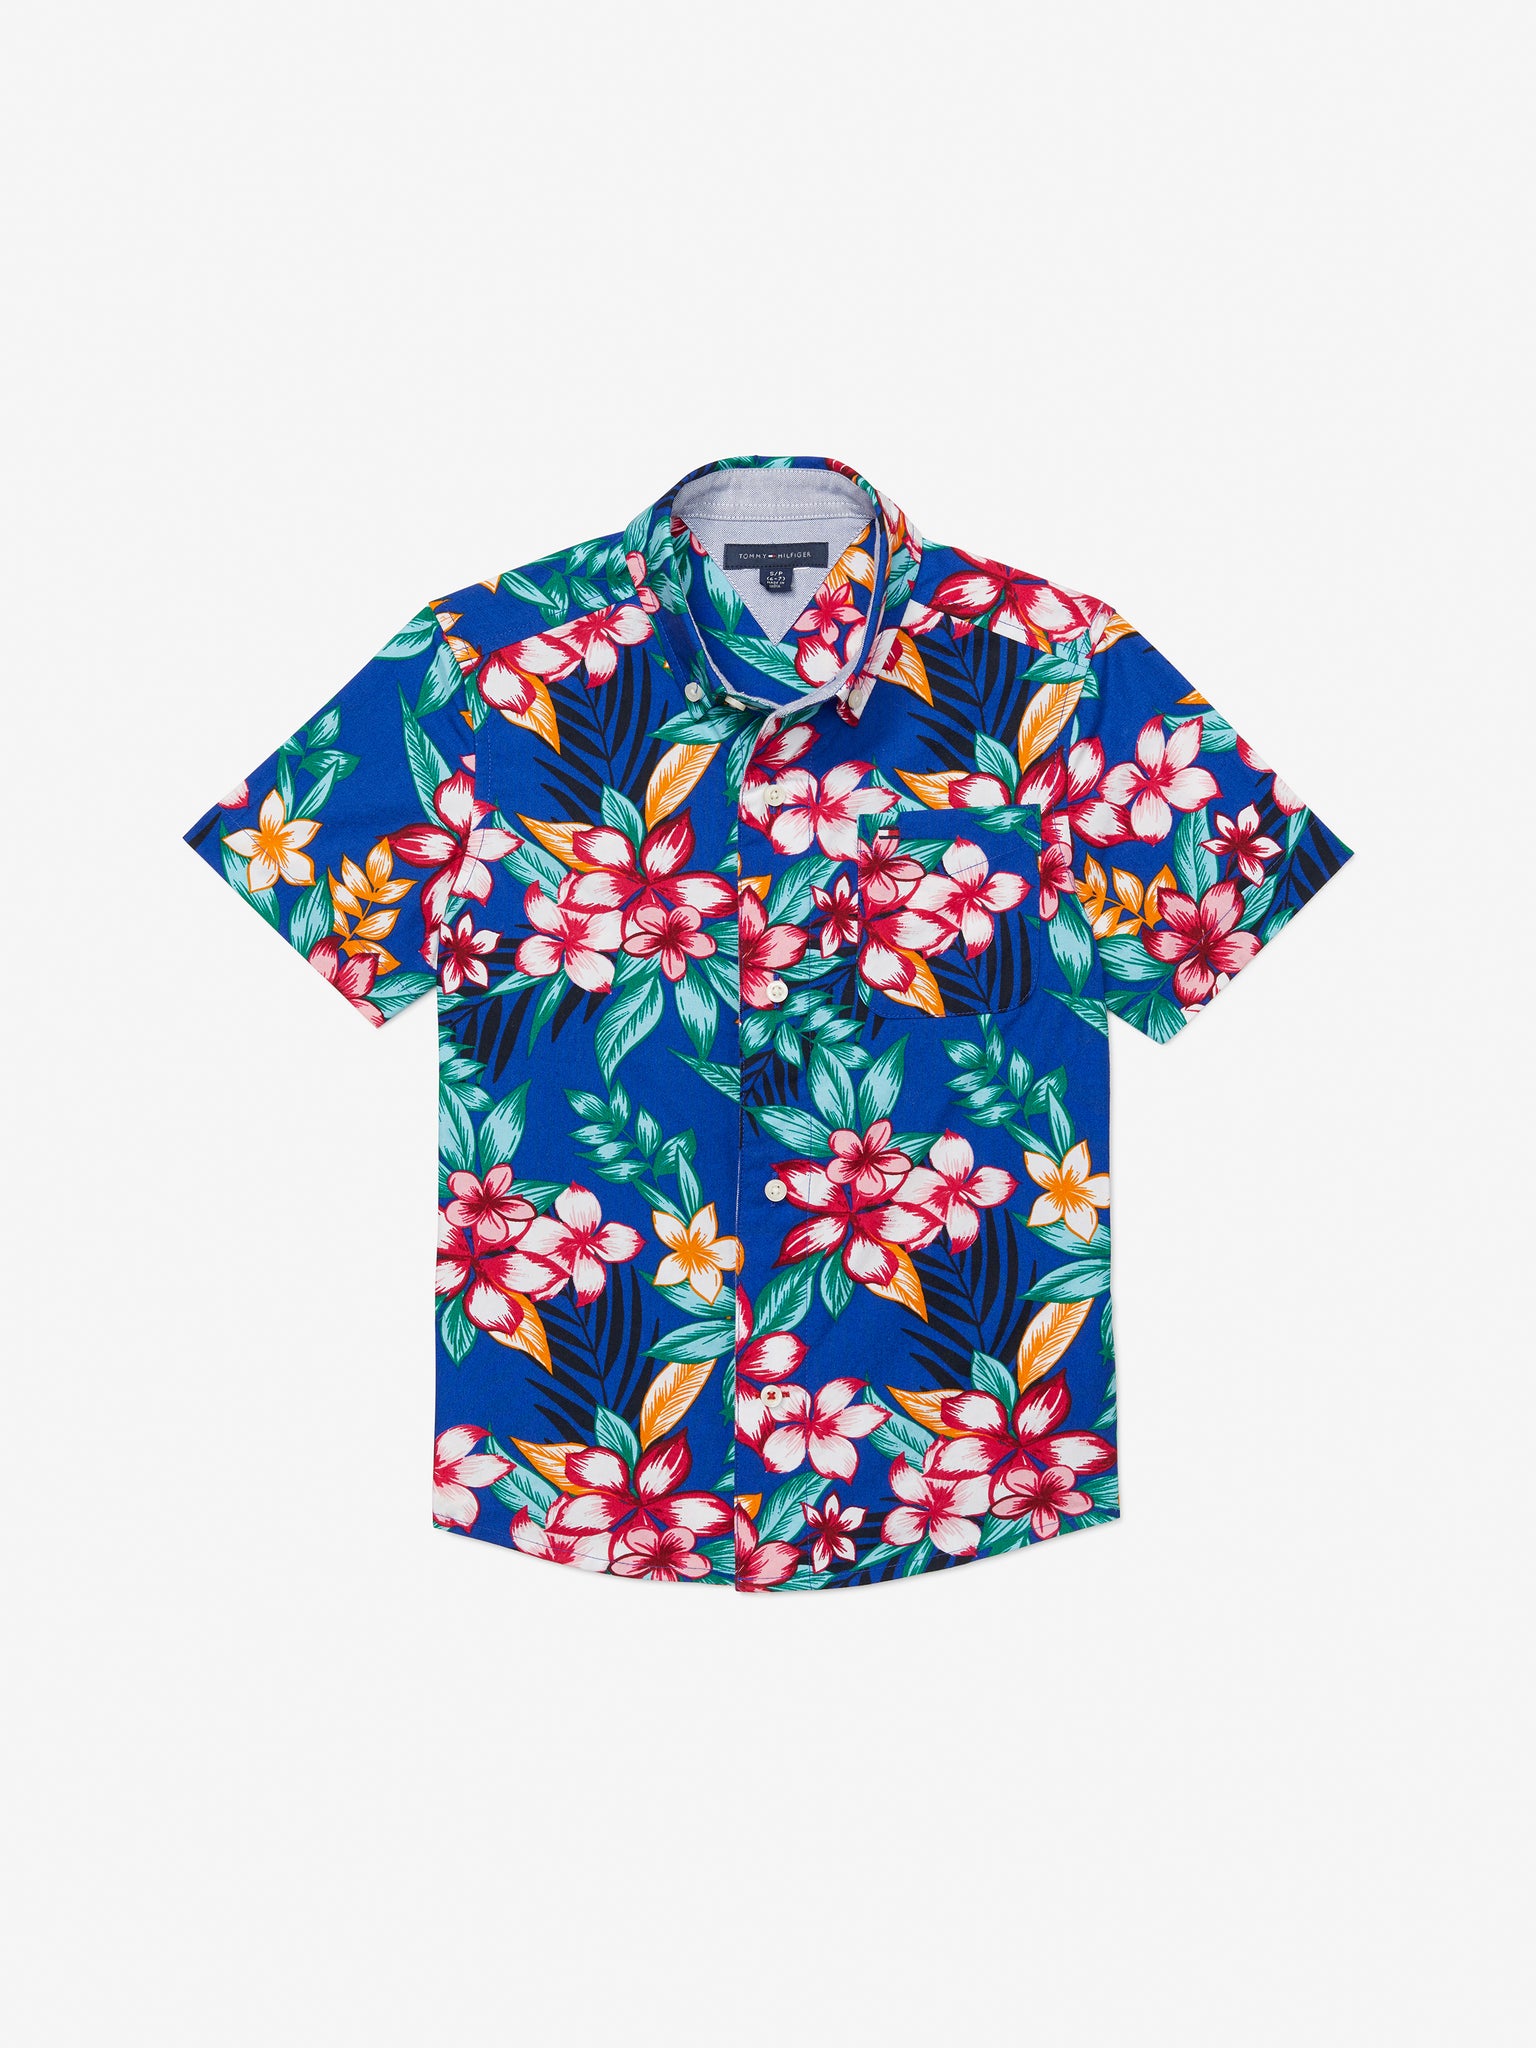 Hot Trop Floral Print Shirt (Boys) - Multi